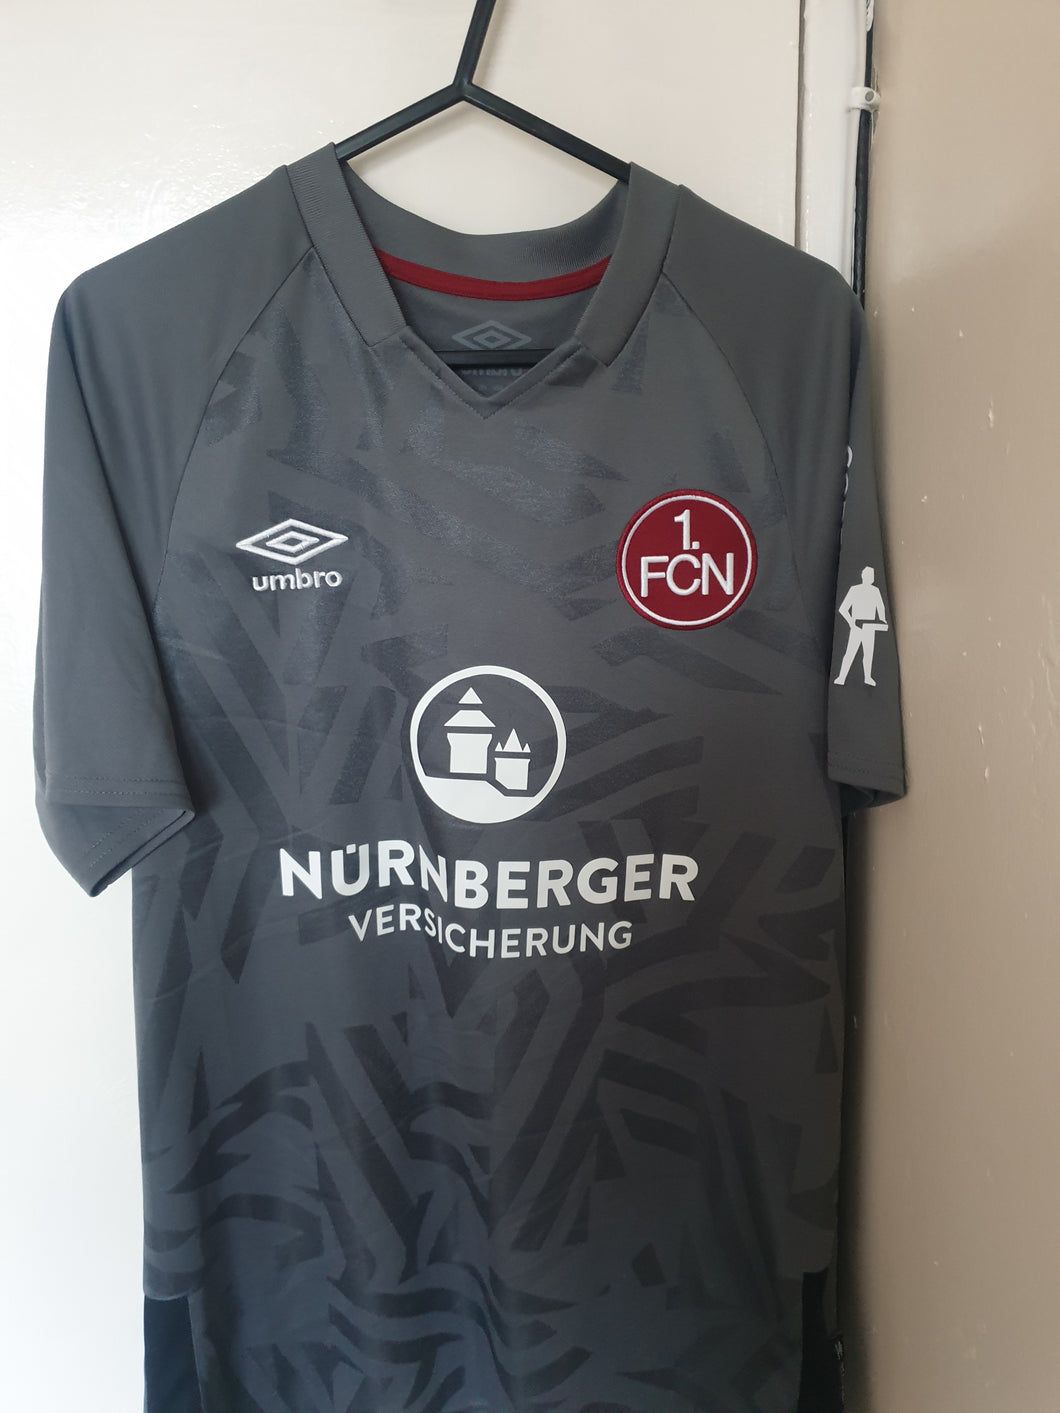 FC Nurnberg 2019-20 Third Shirt (Size Small)